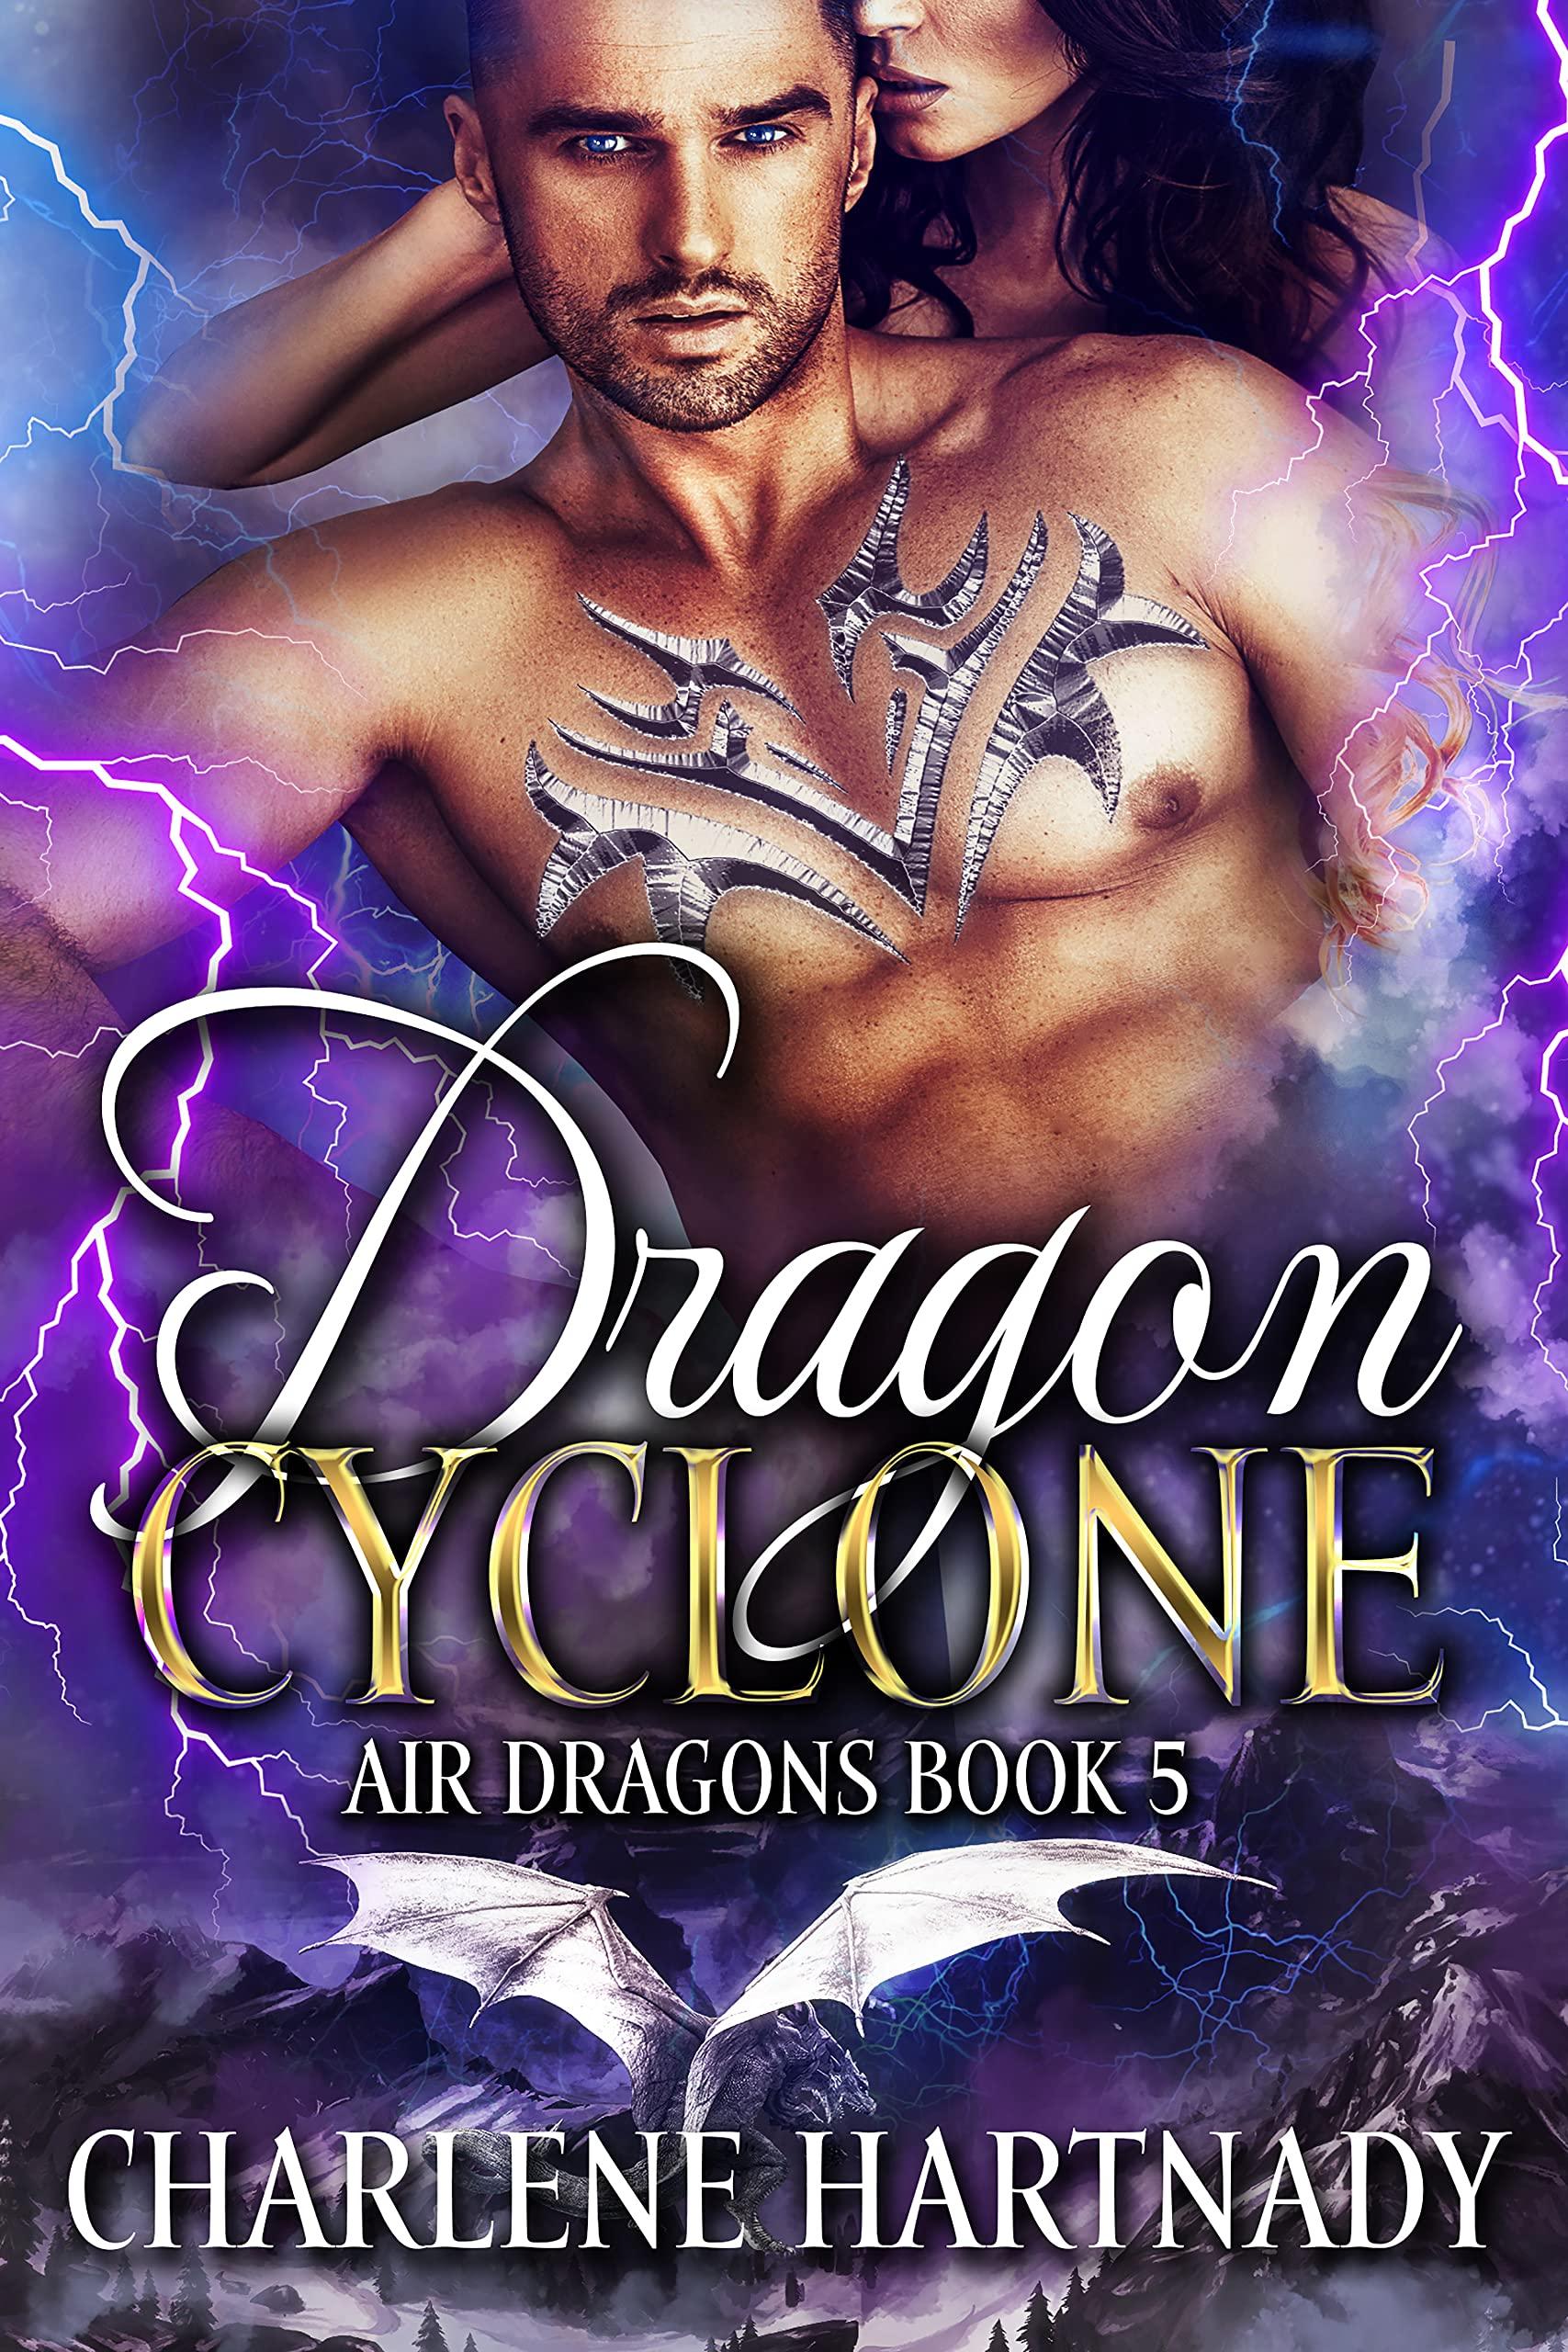 Dragon Cyclone